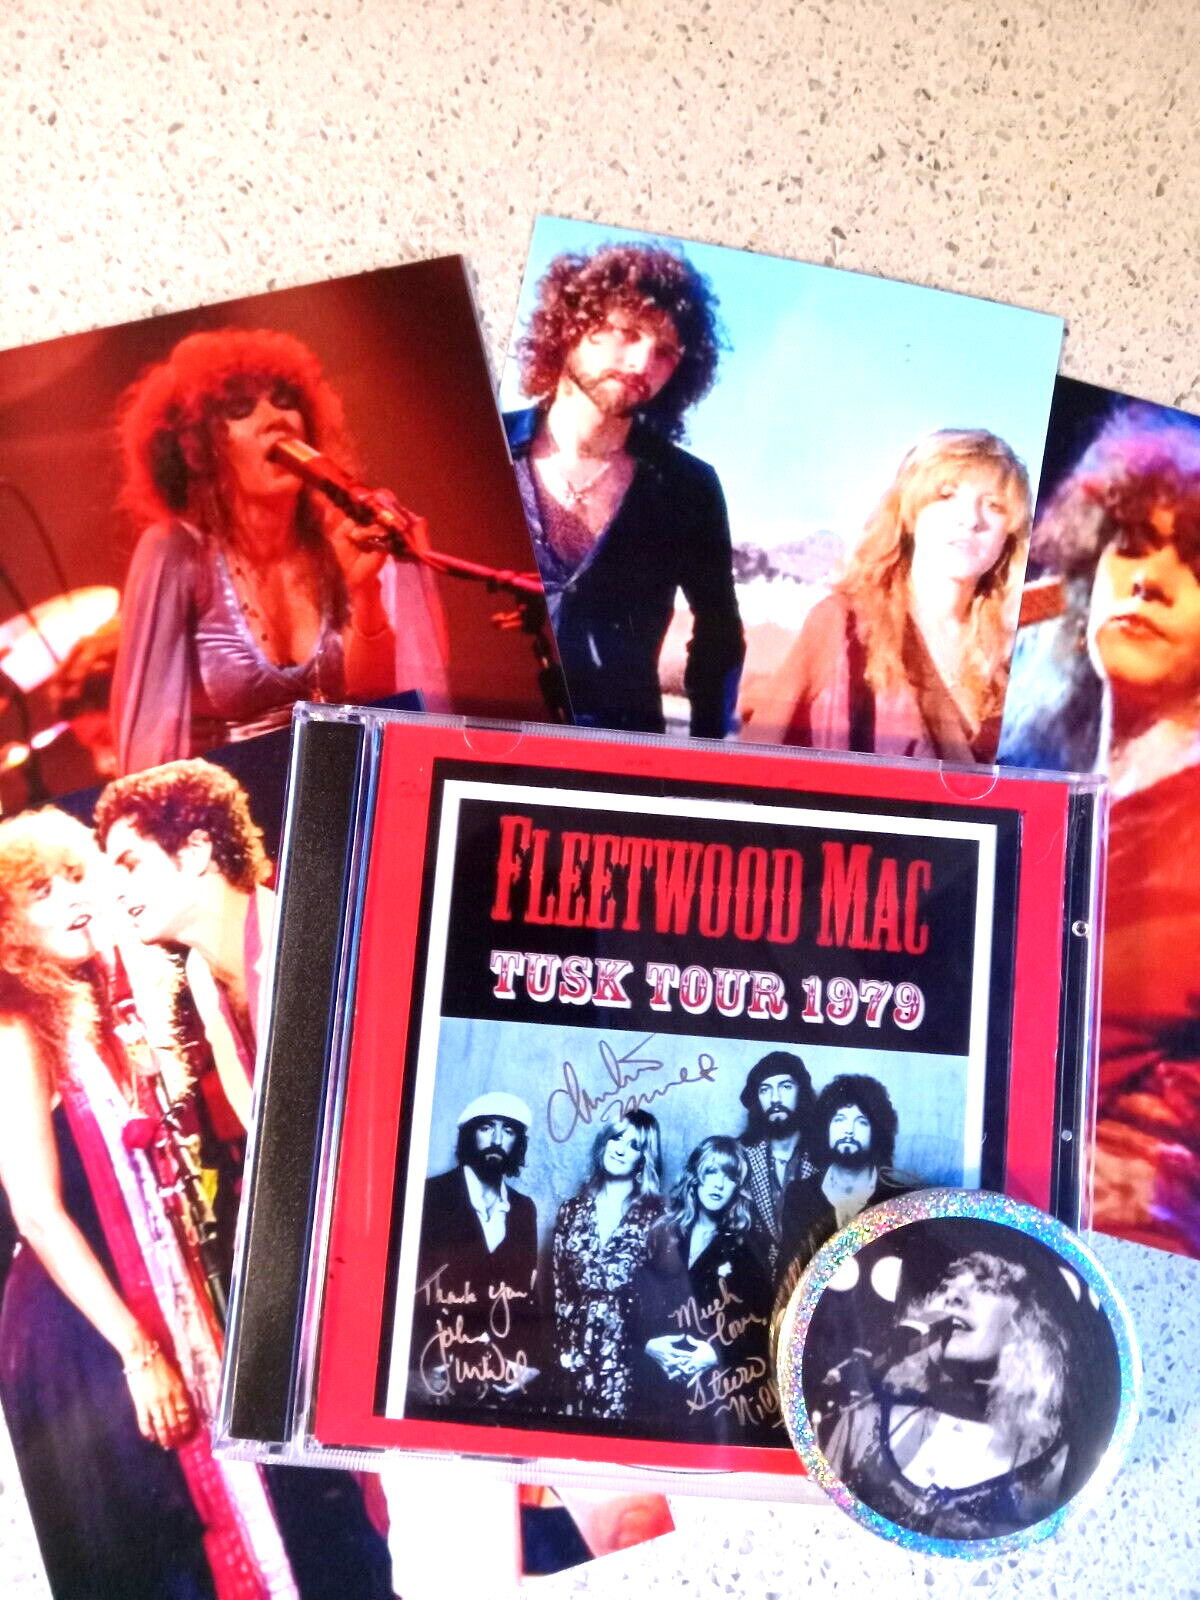 FLEETWOOD MAC Nicks vtg BUTTON / PIN & Photos + free Rare 2 CD 1979 Boston TUSK